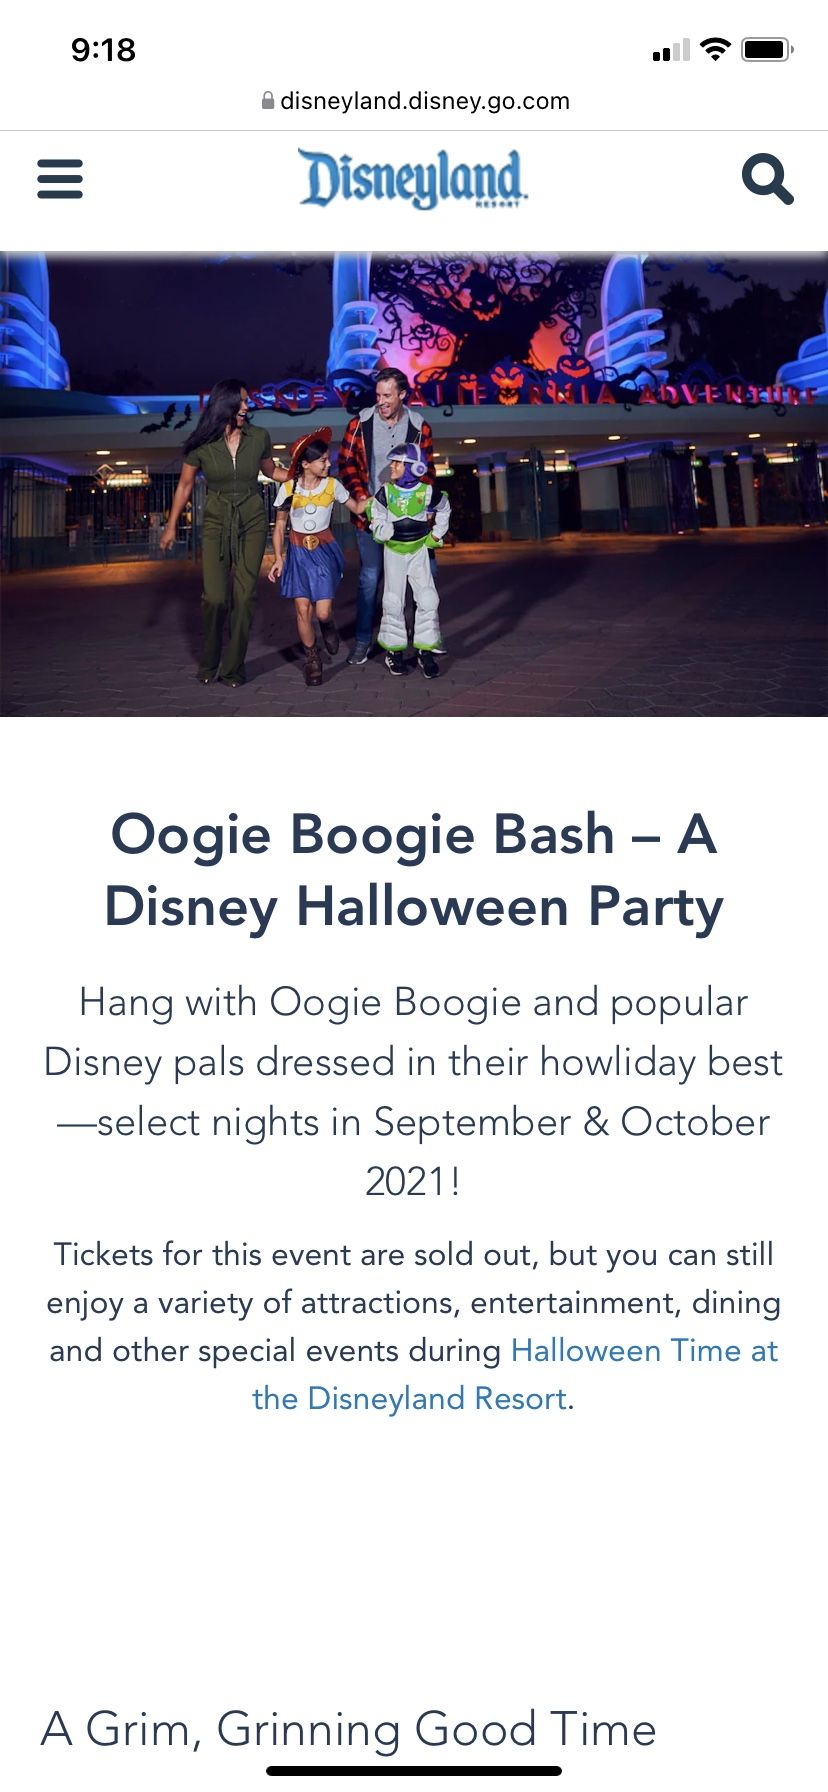 Oogie Boogie Bash Ticket 